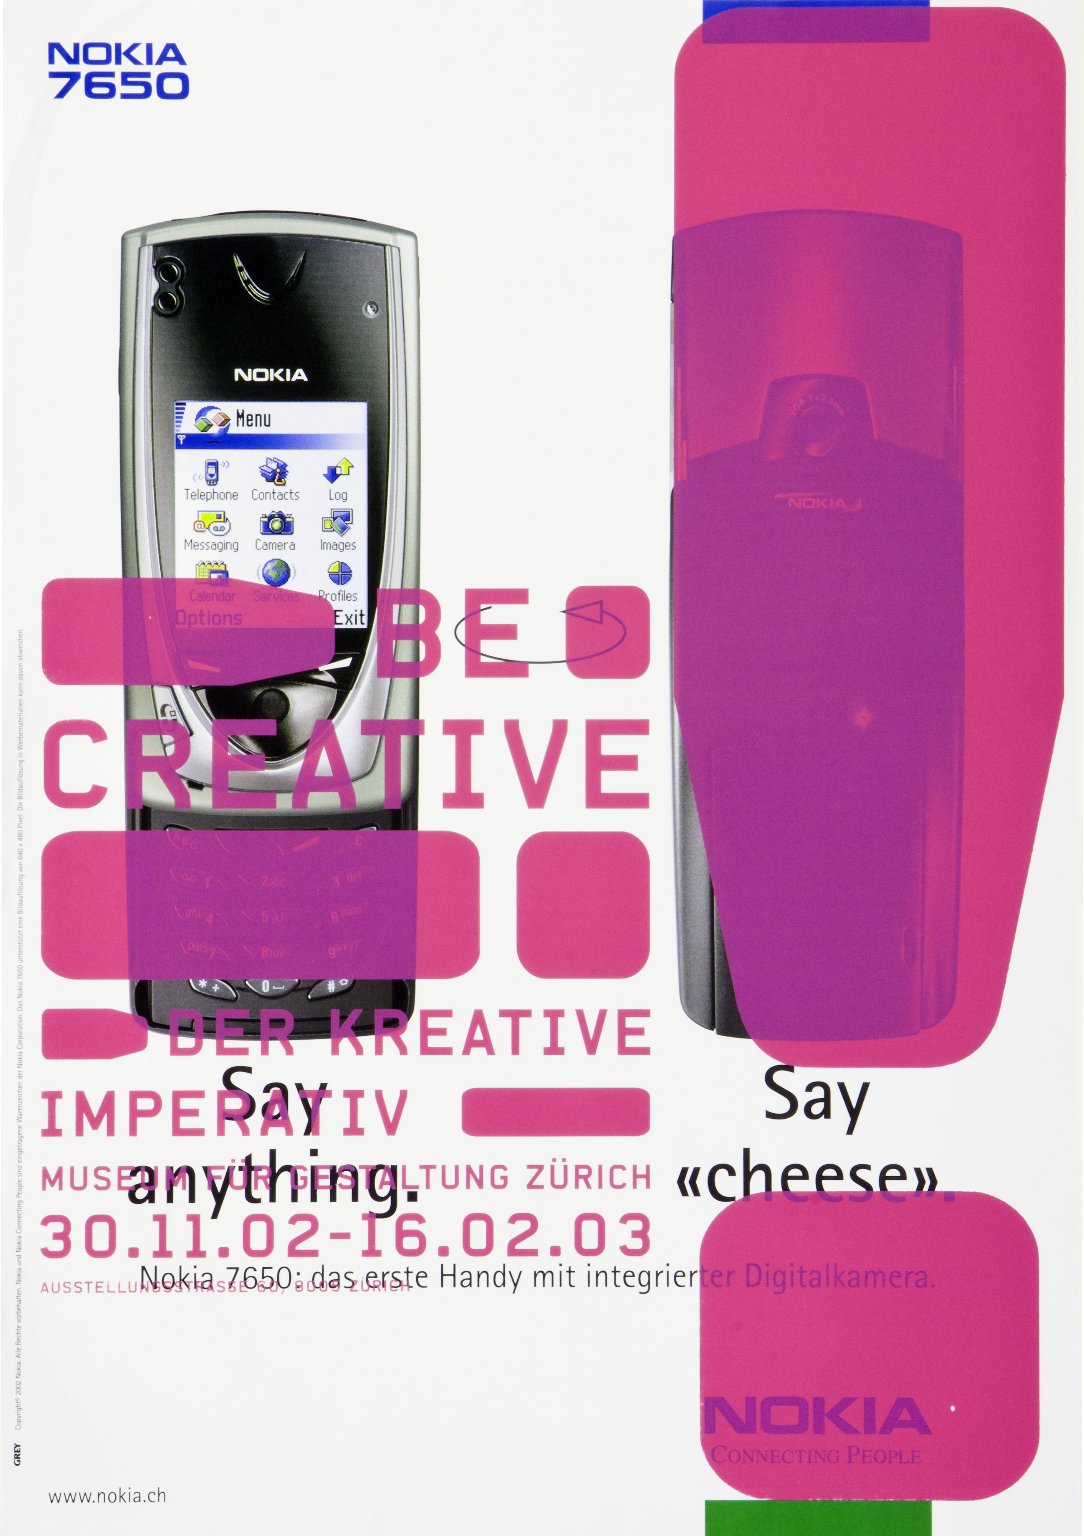 Be Creative: Der Kreative Imperativ